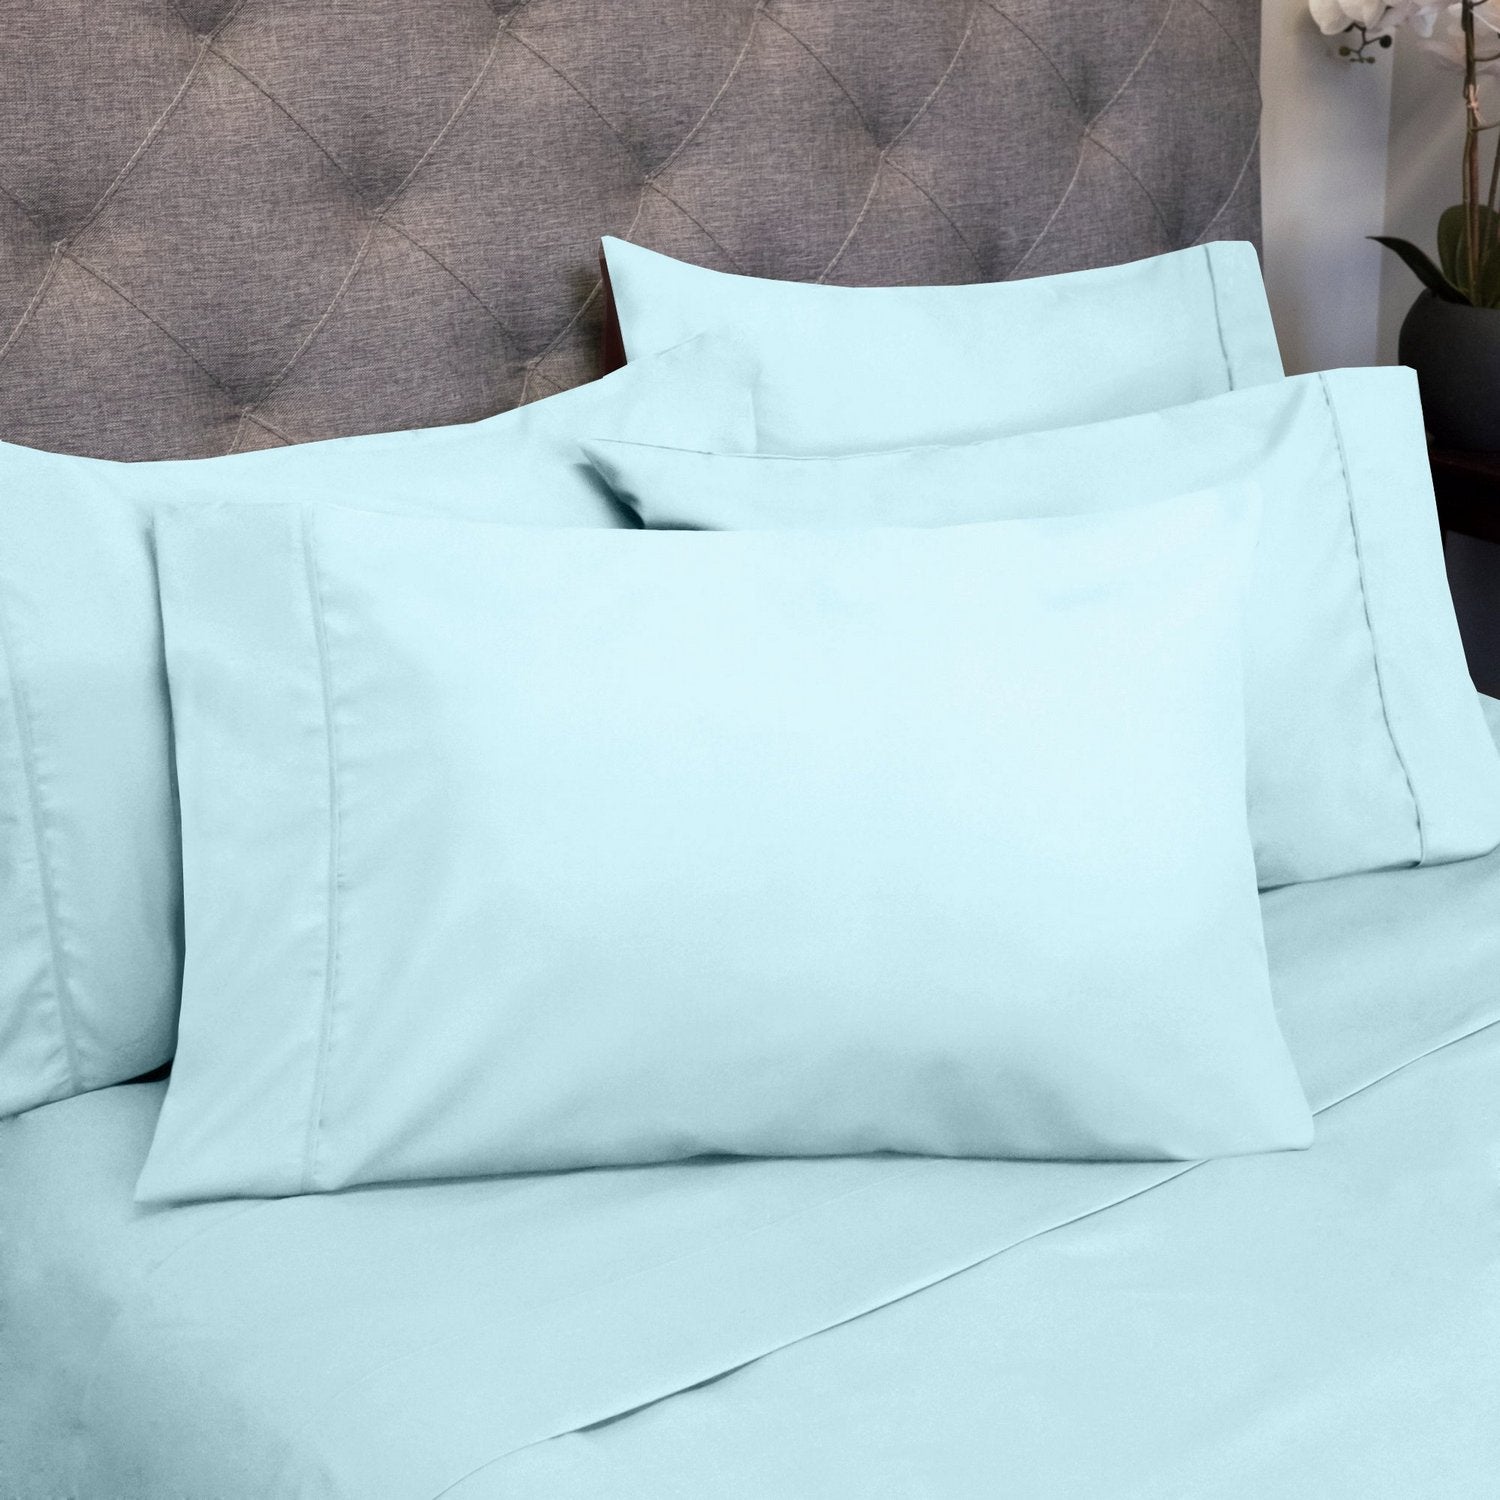 Deluxe 6-Piece Bed Sheet Set (Aqua) - Pillowcases